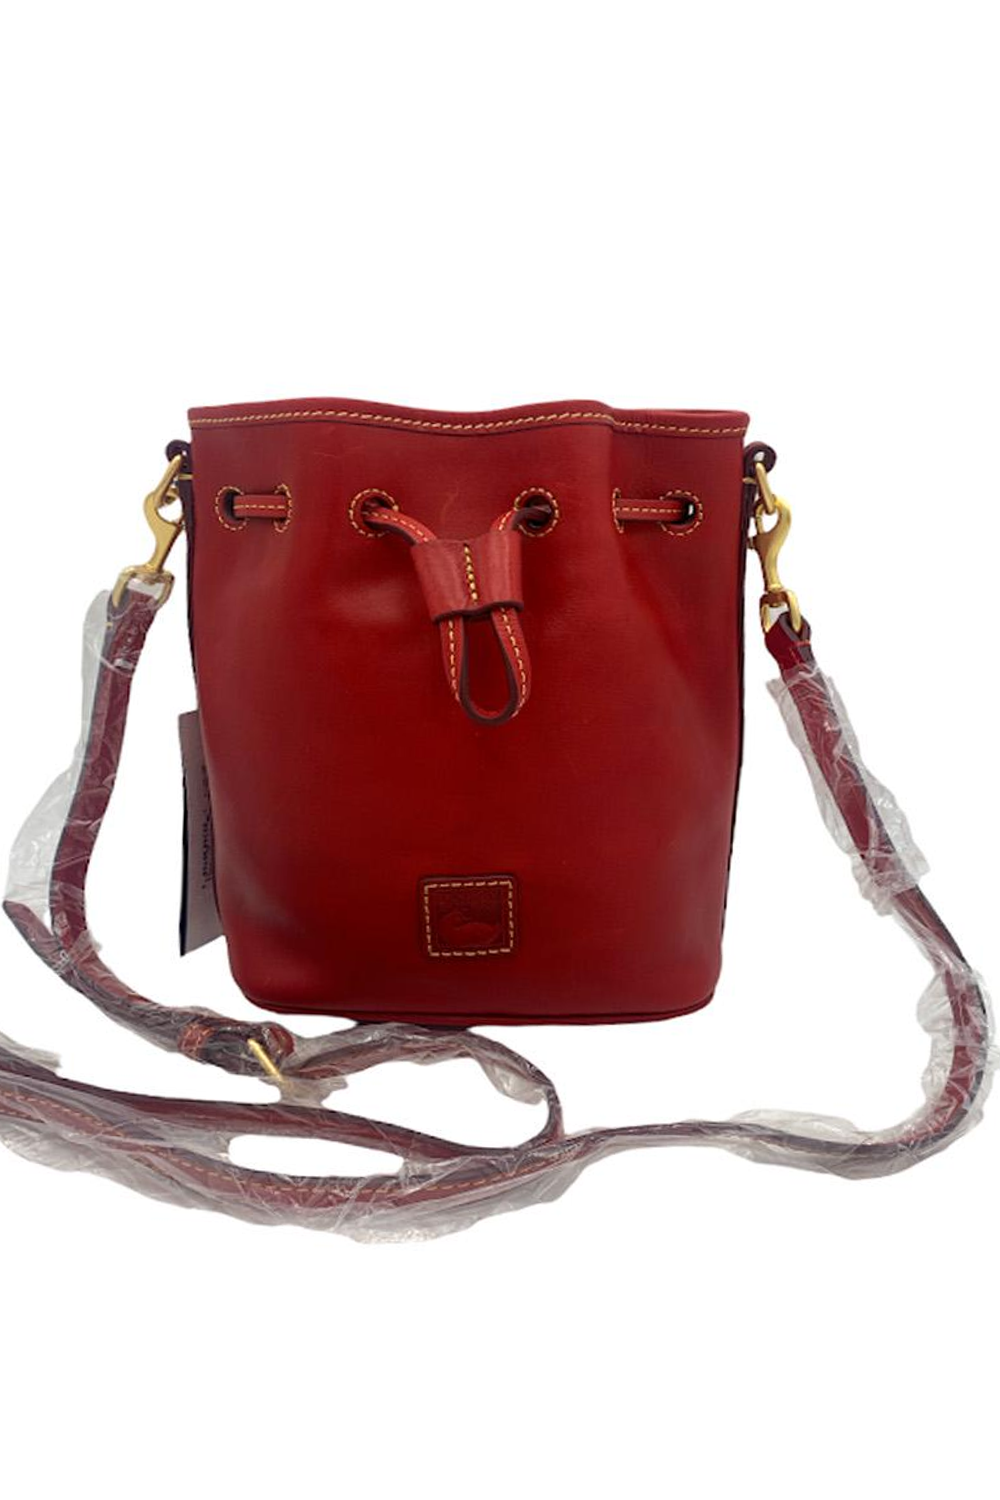 Dooney & Bourke Florentine Leather Small Drawstring Bag 